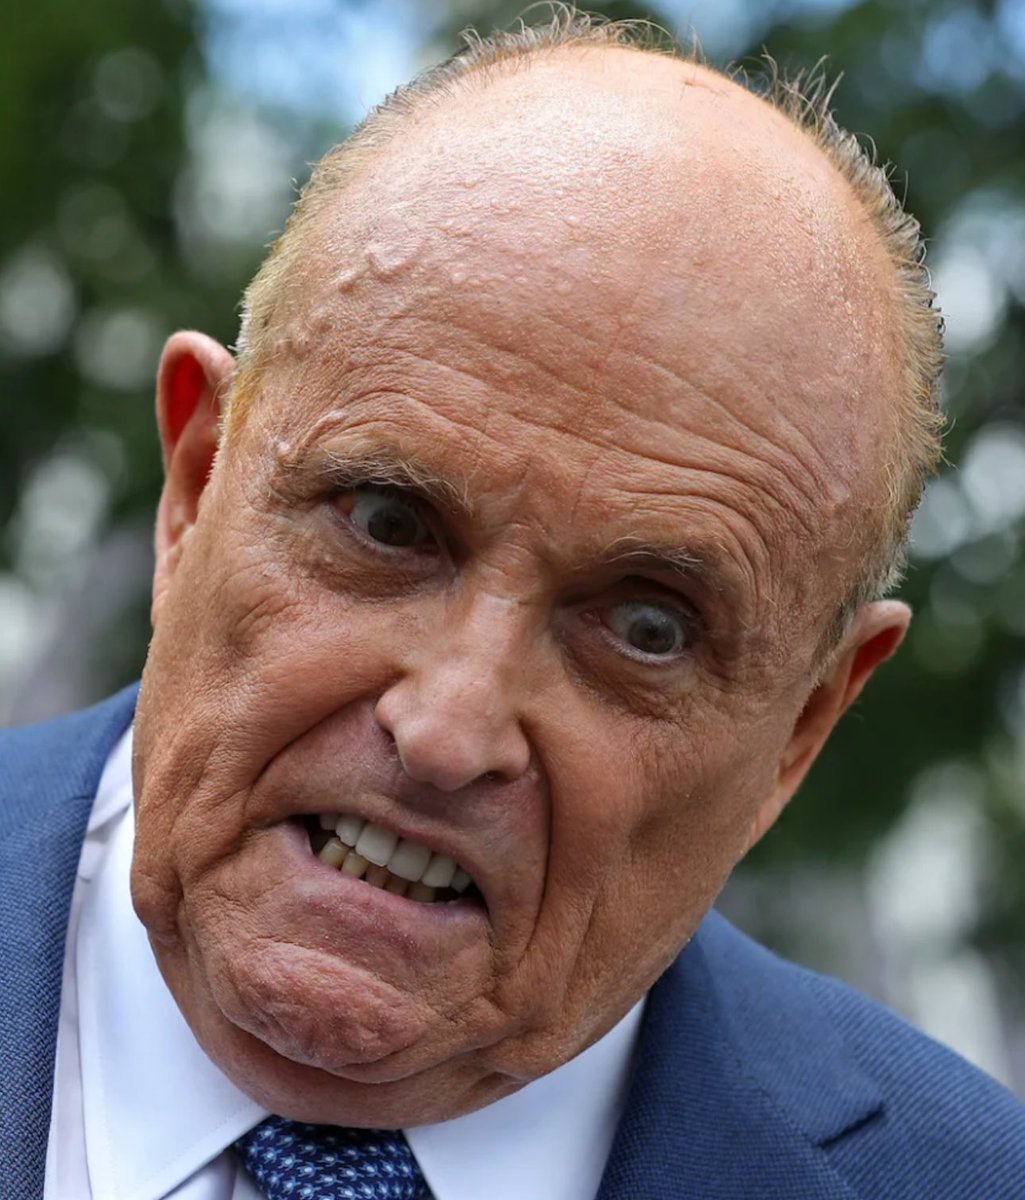 Describe Rudy Giuliani in ONE word.